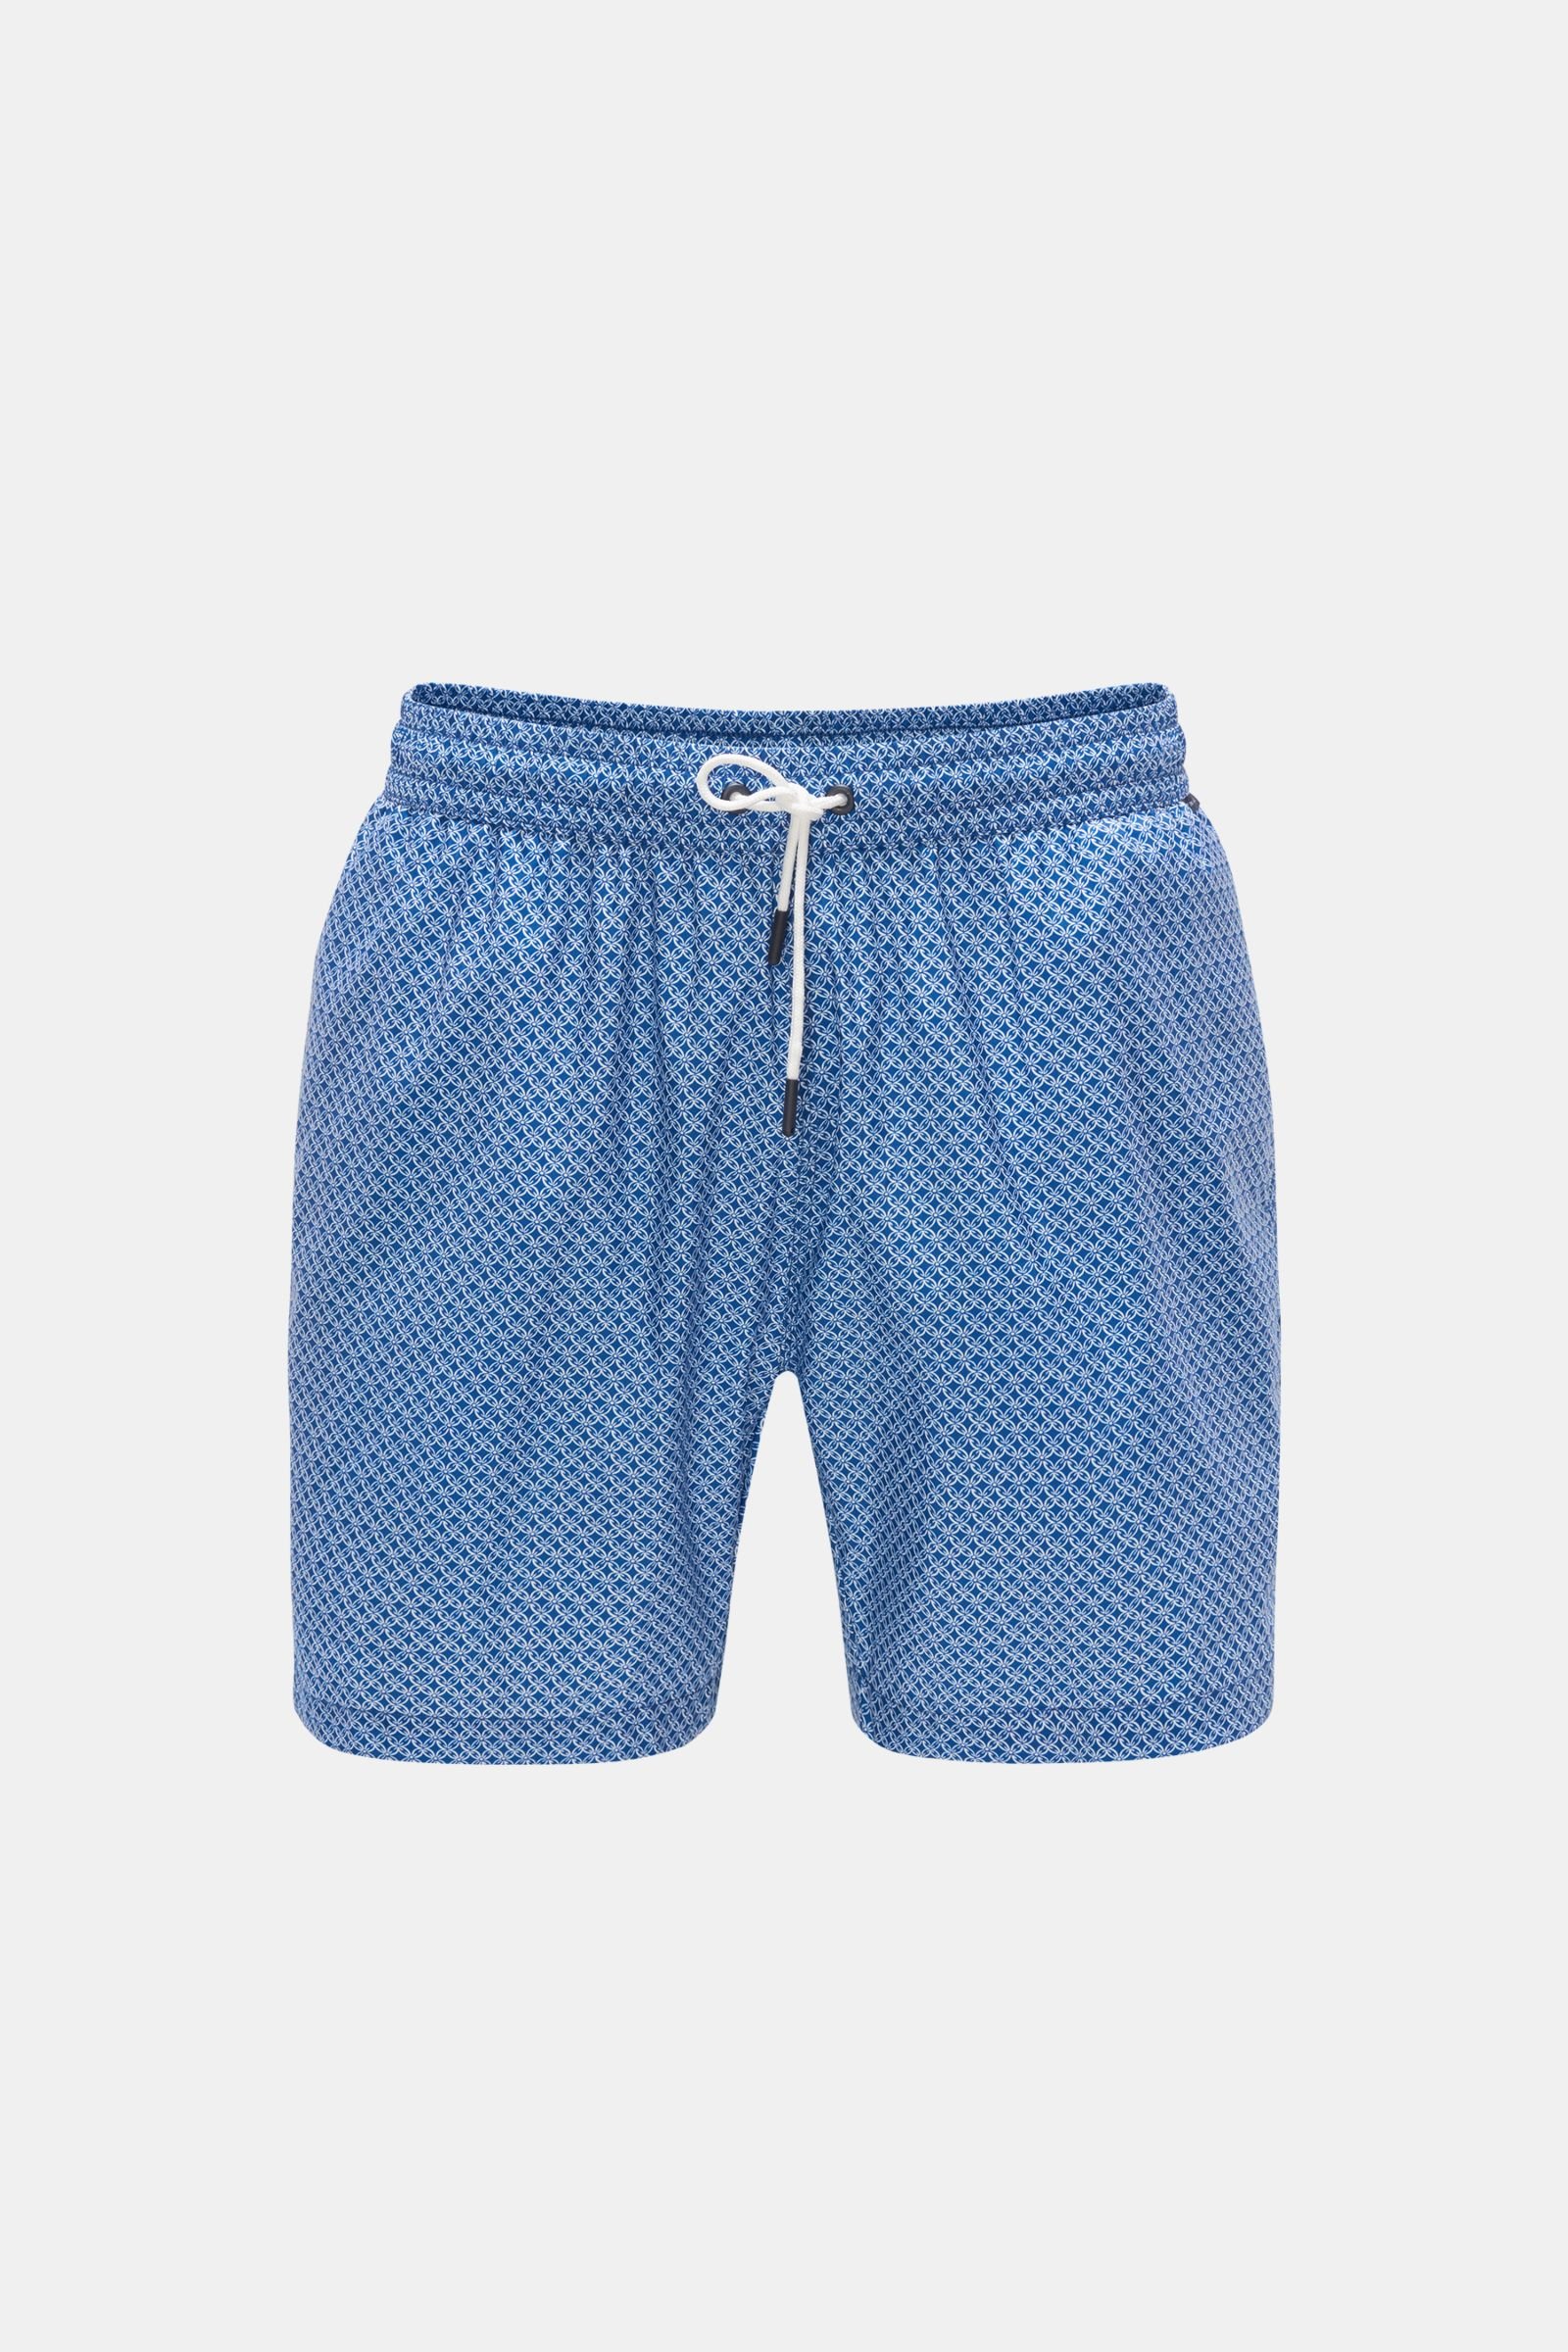 Swim shorts 'Tile Swim' blue/white patterned